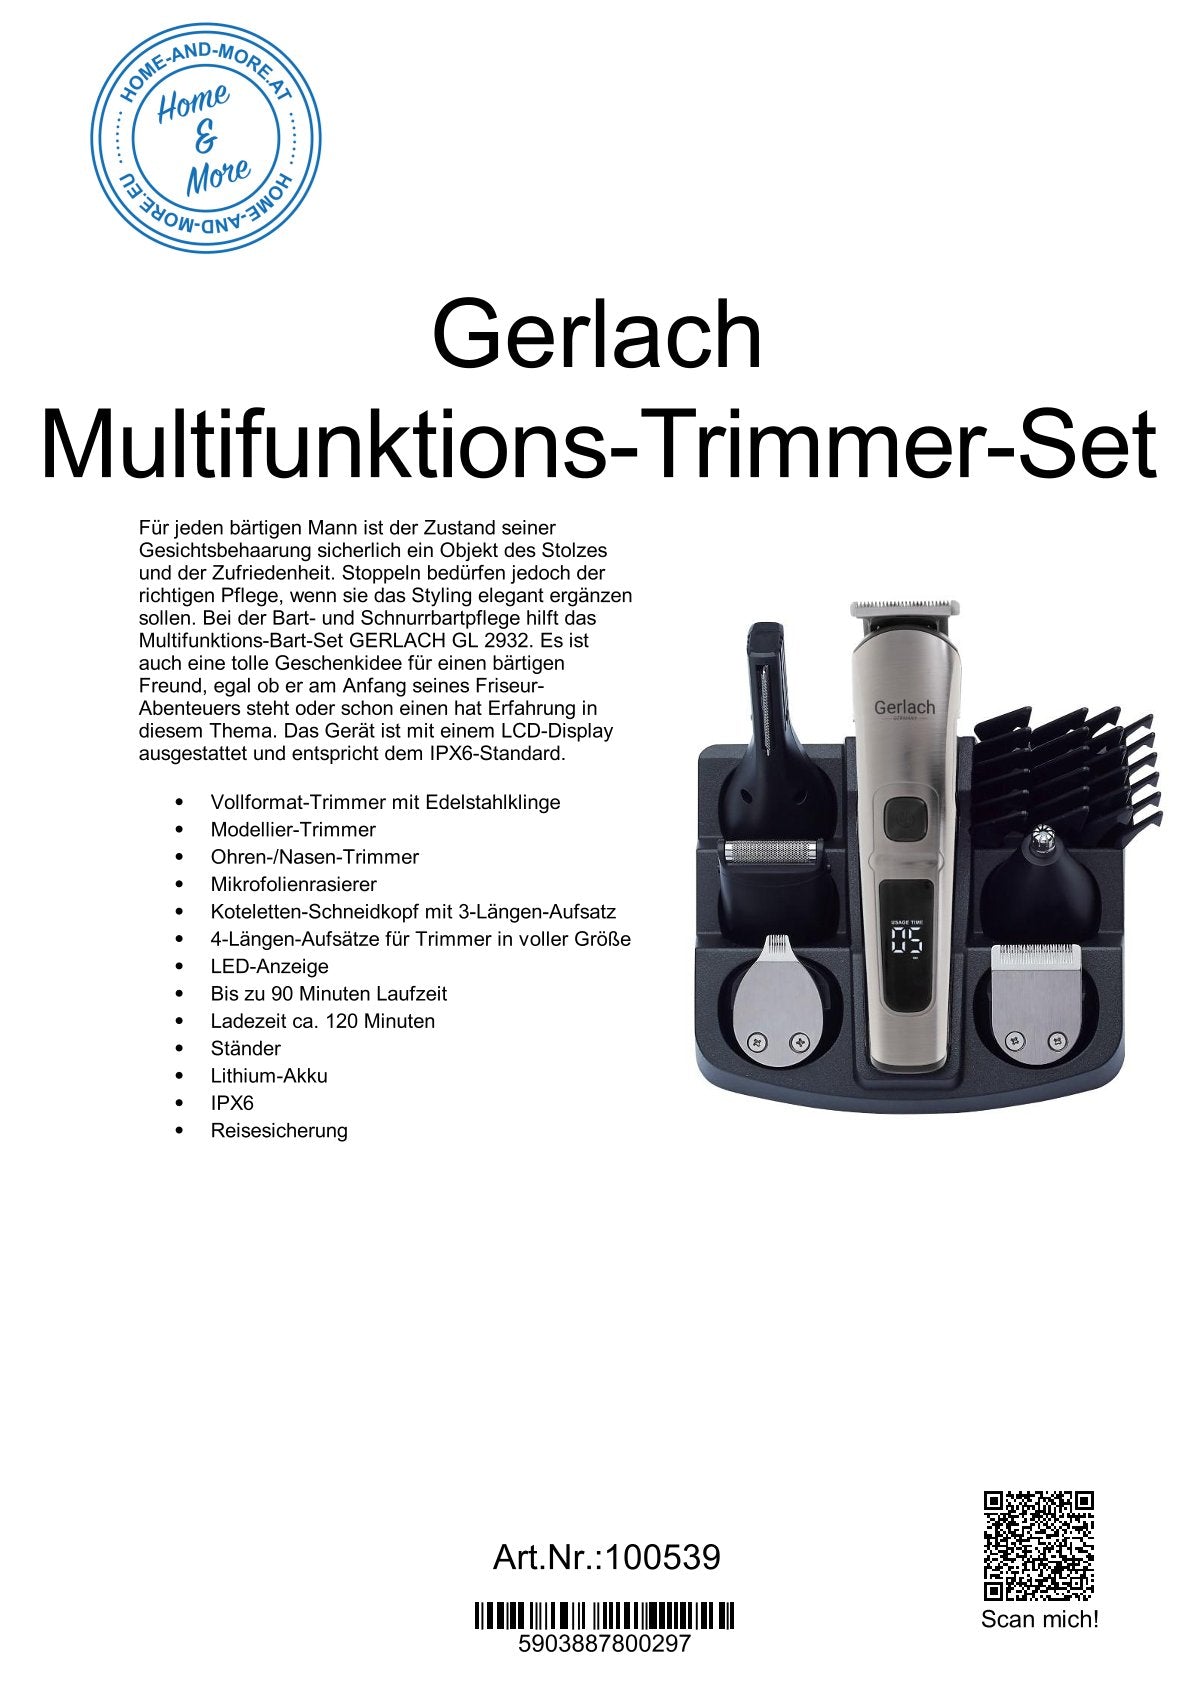 Gerlach Multifunktions-Trimmer-Set GL2932